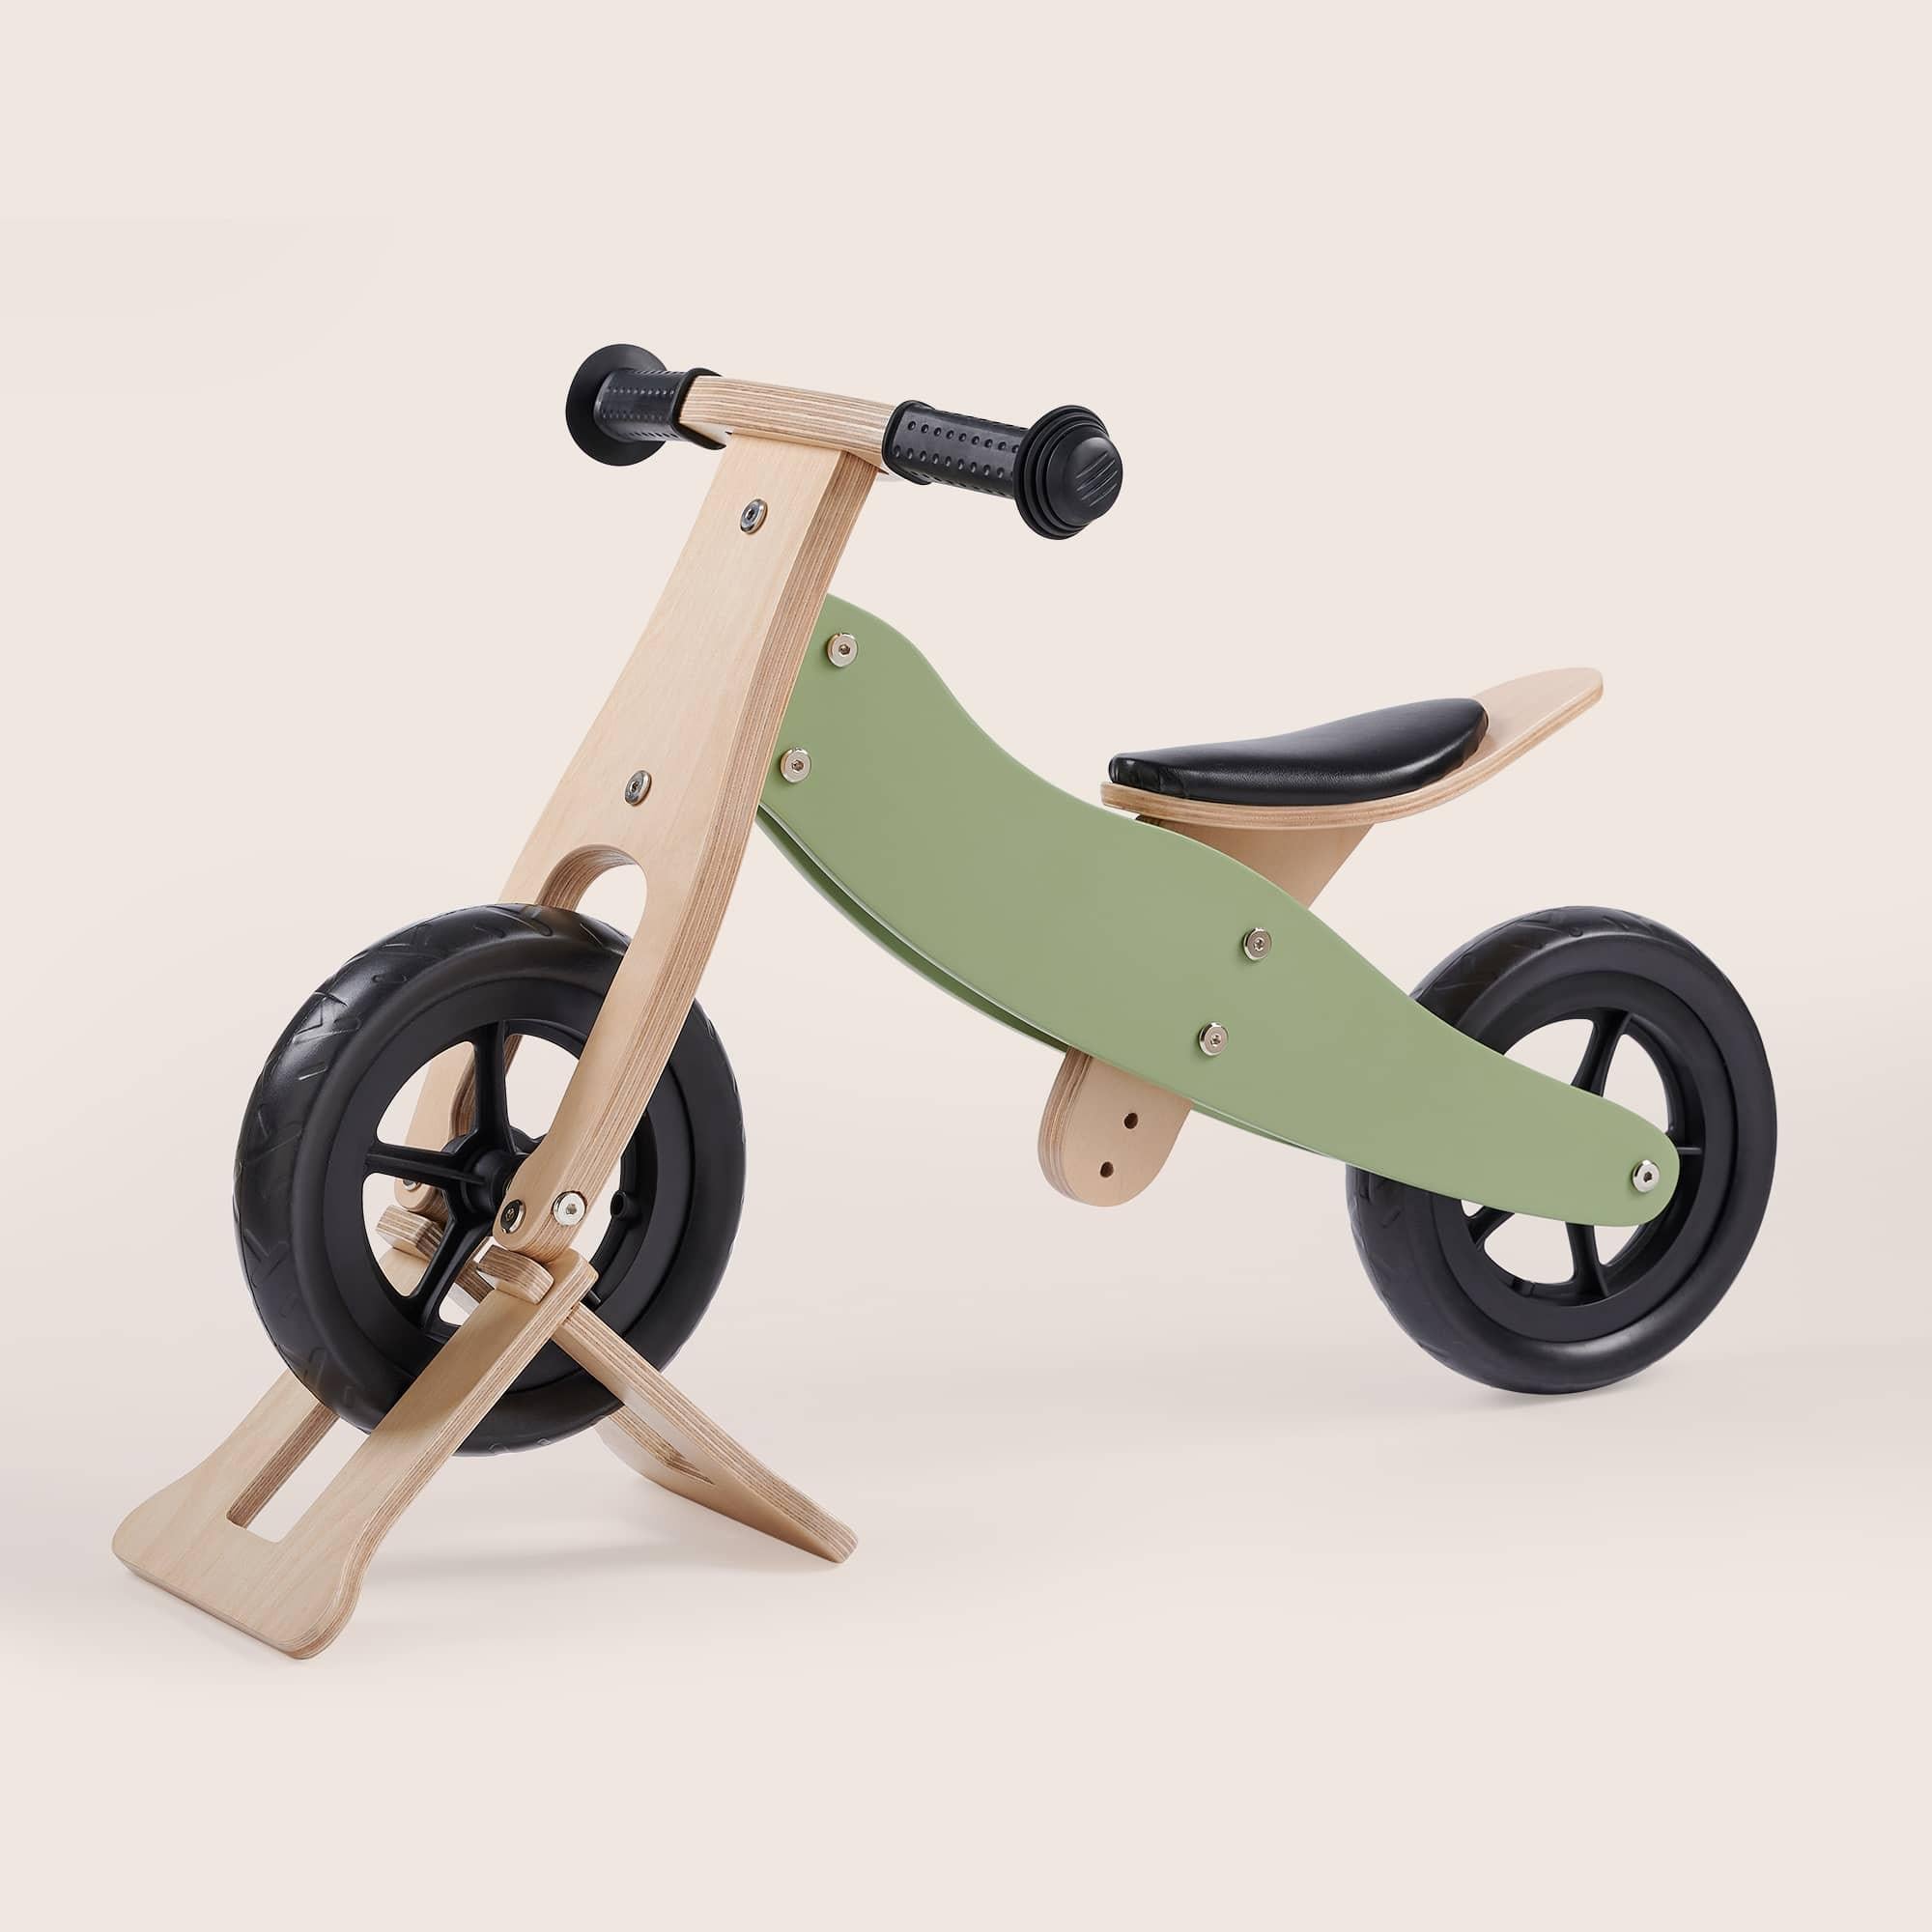 Tiny Land® Wooden Balance Bike Stand